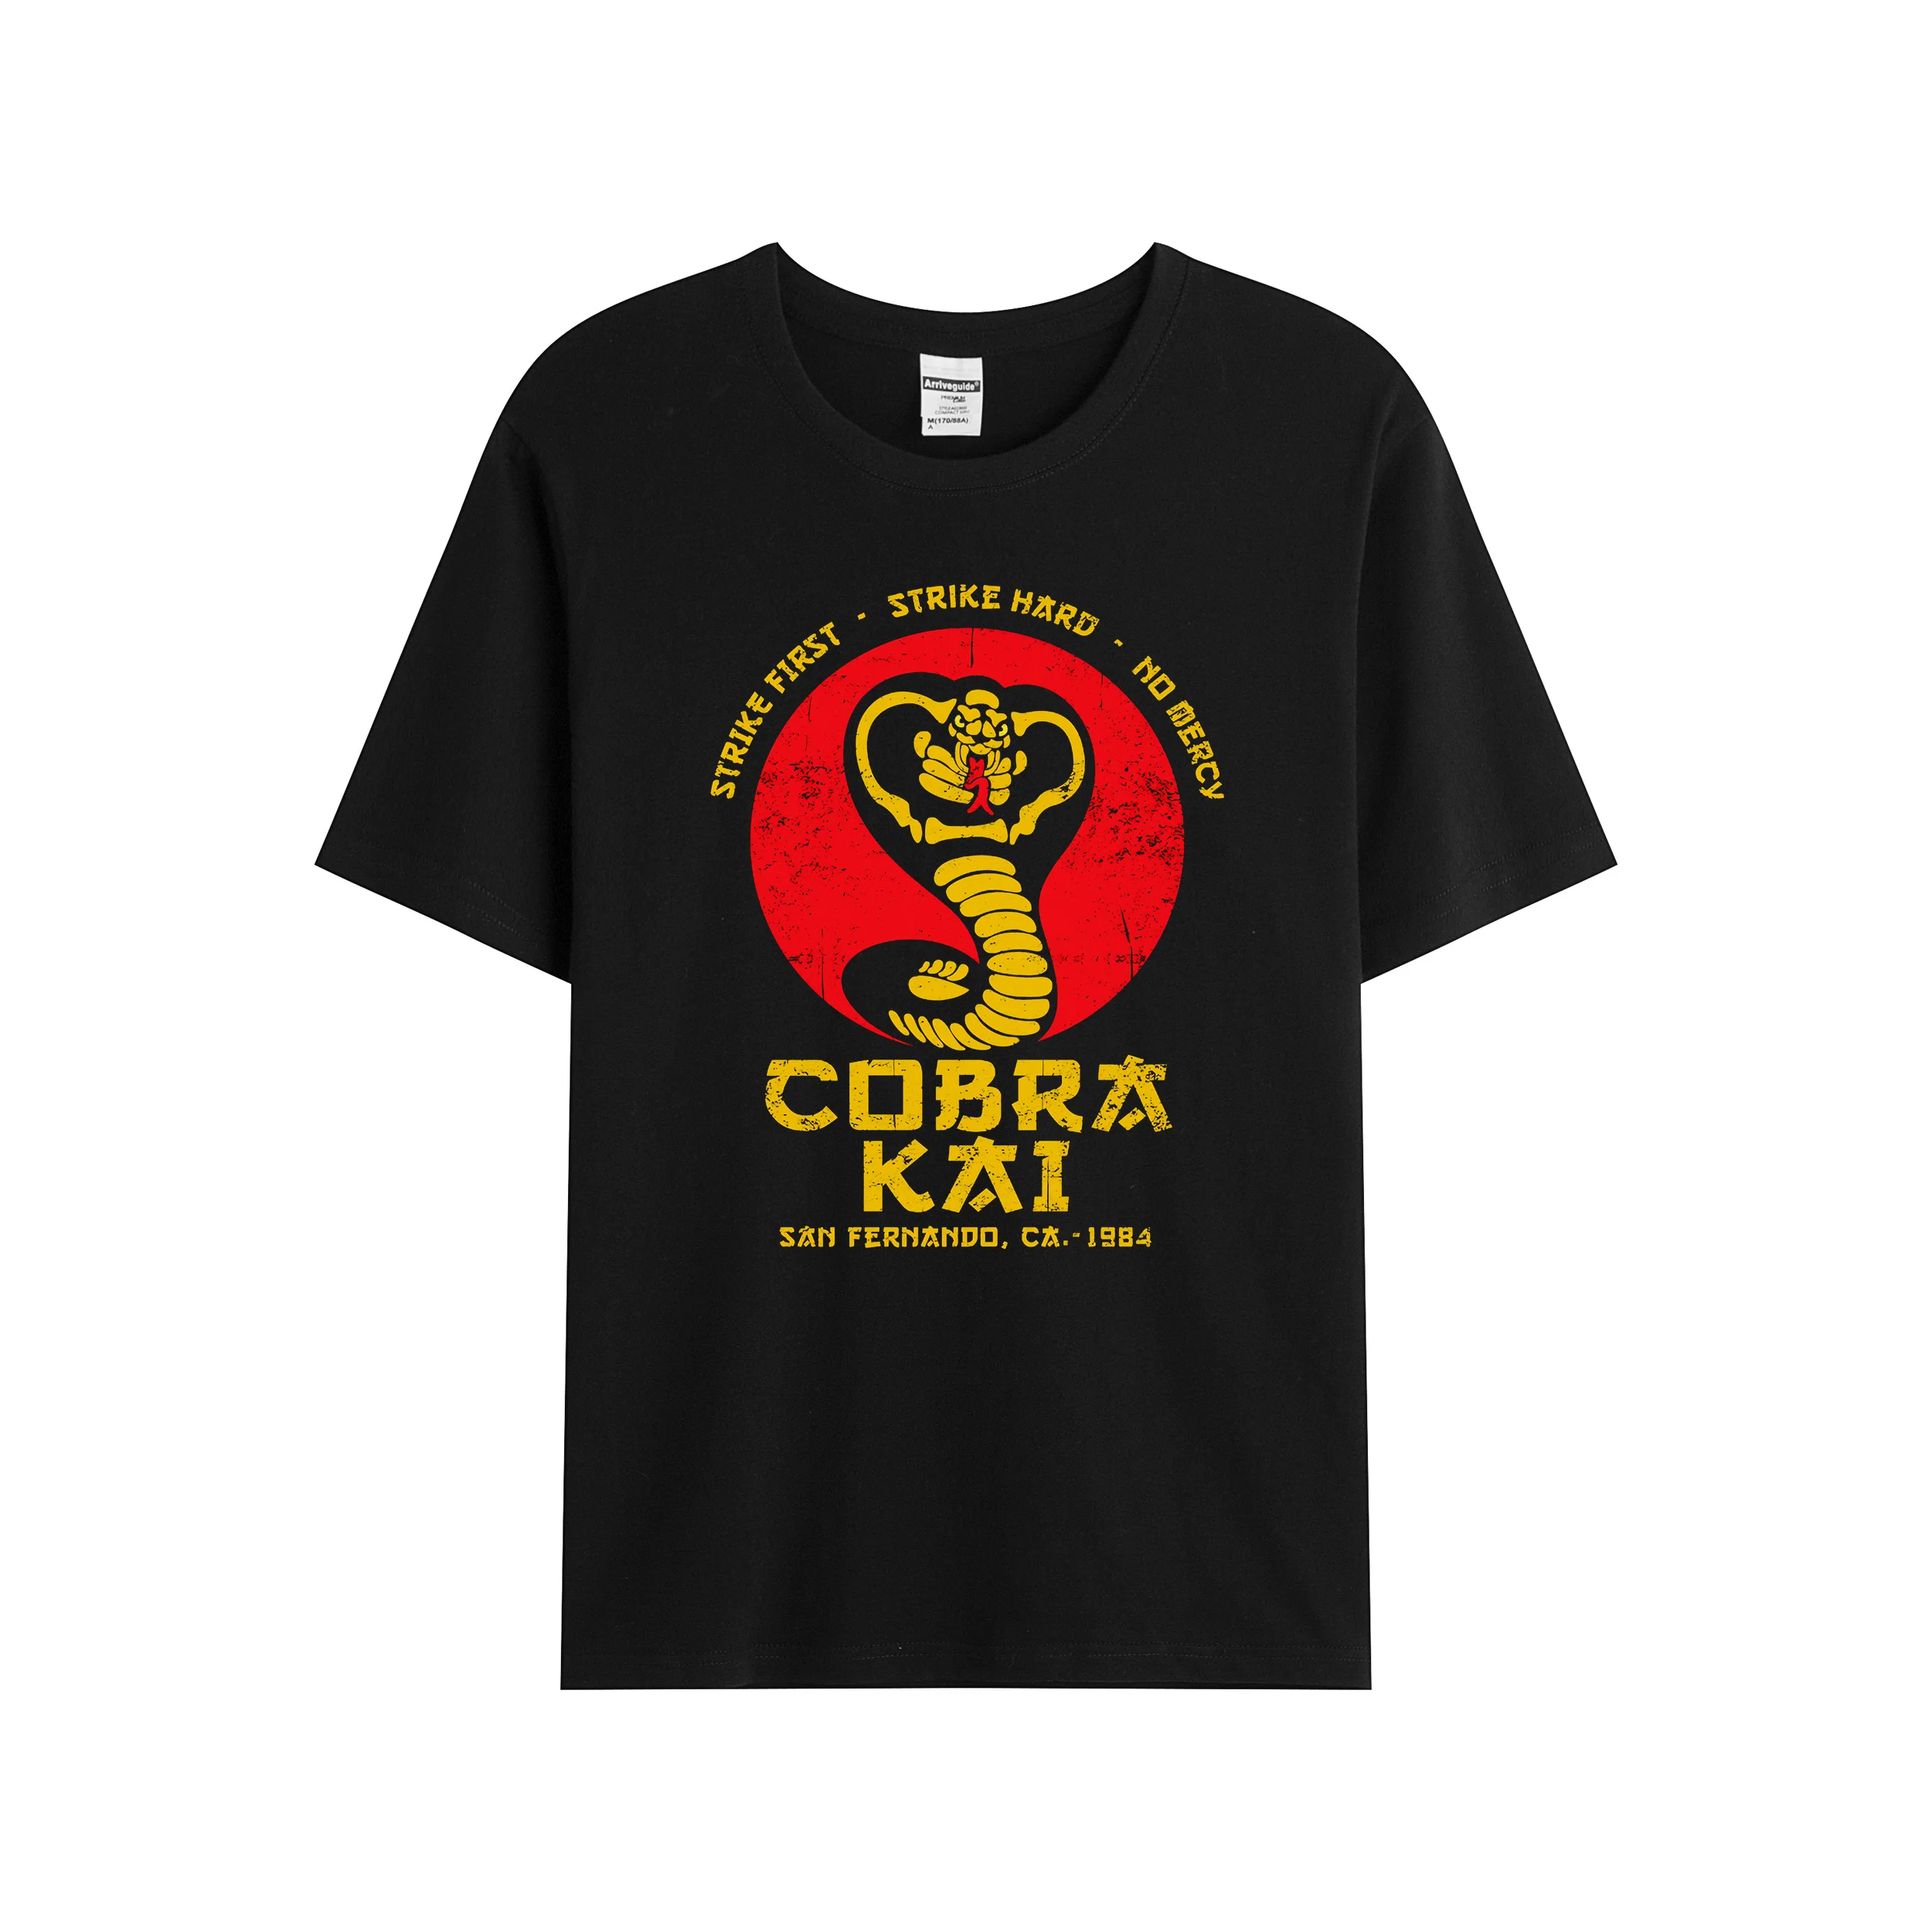 

2021 Men/Women's Summer Black Street Fashion Hip Hop Cobra Kai Red Circle Cobra T-shirt Cotton Tees Short Sleeve Tops